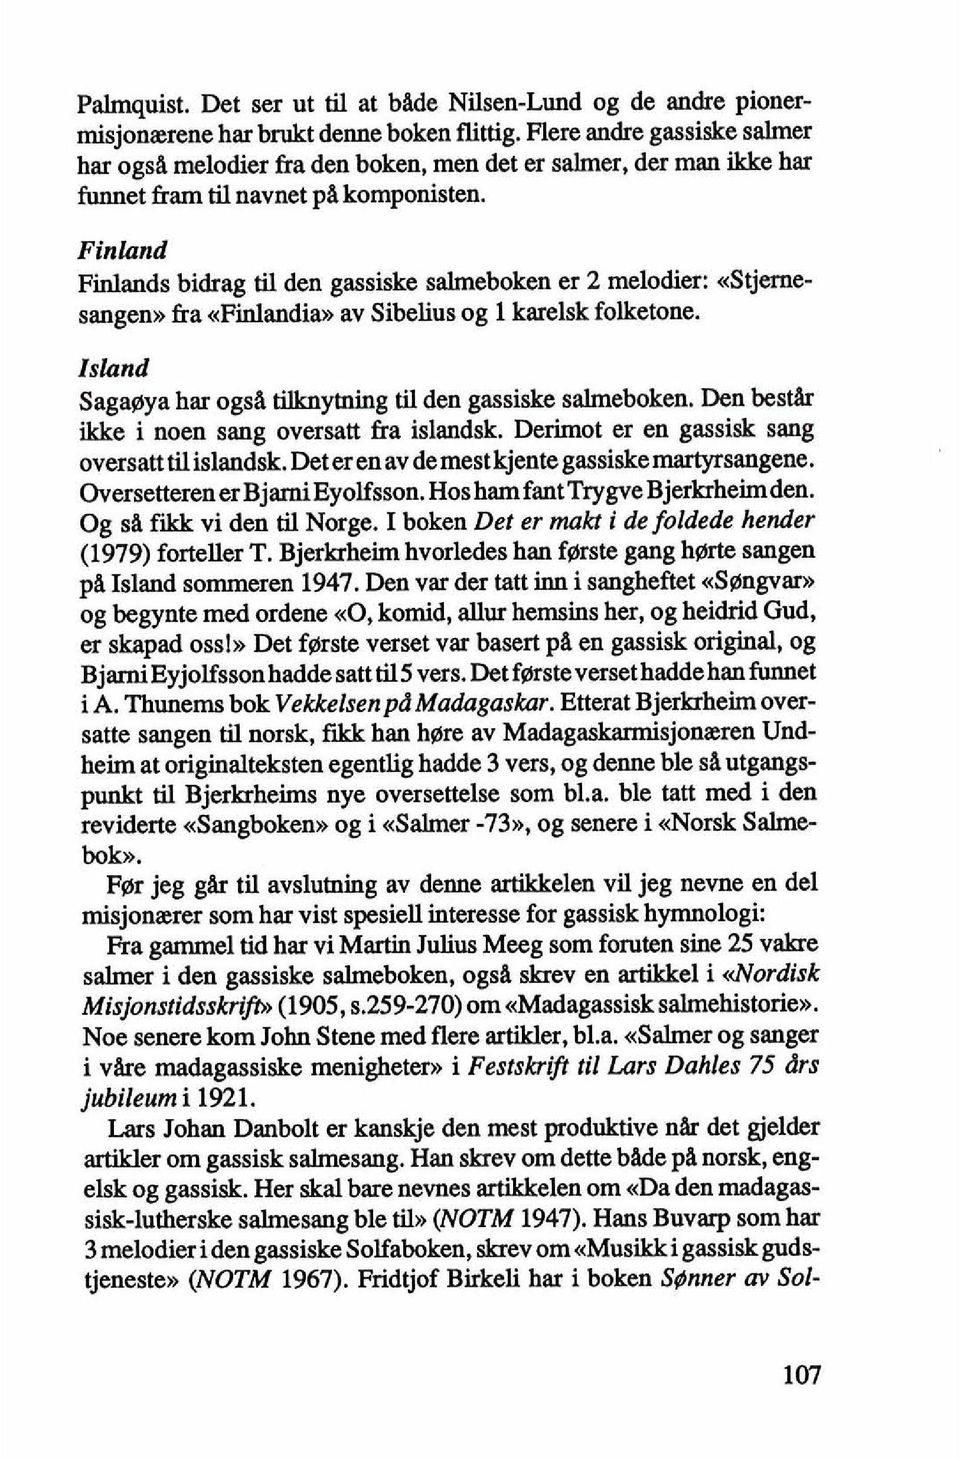 Finland Finlands bidrag til den gassiske sahneboken er 2 melodier: ustjernesangen,) fra ~Finlandim av Sibelius og 1 karelsk folketone. Island Sagaaya hat ogs& tilknytning til den gassiske salmeboken.